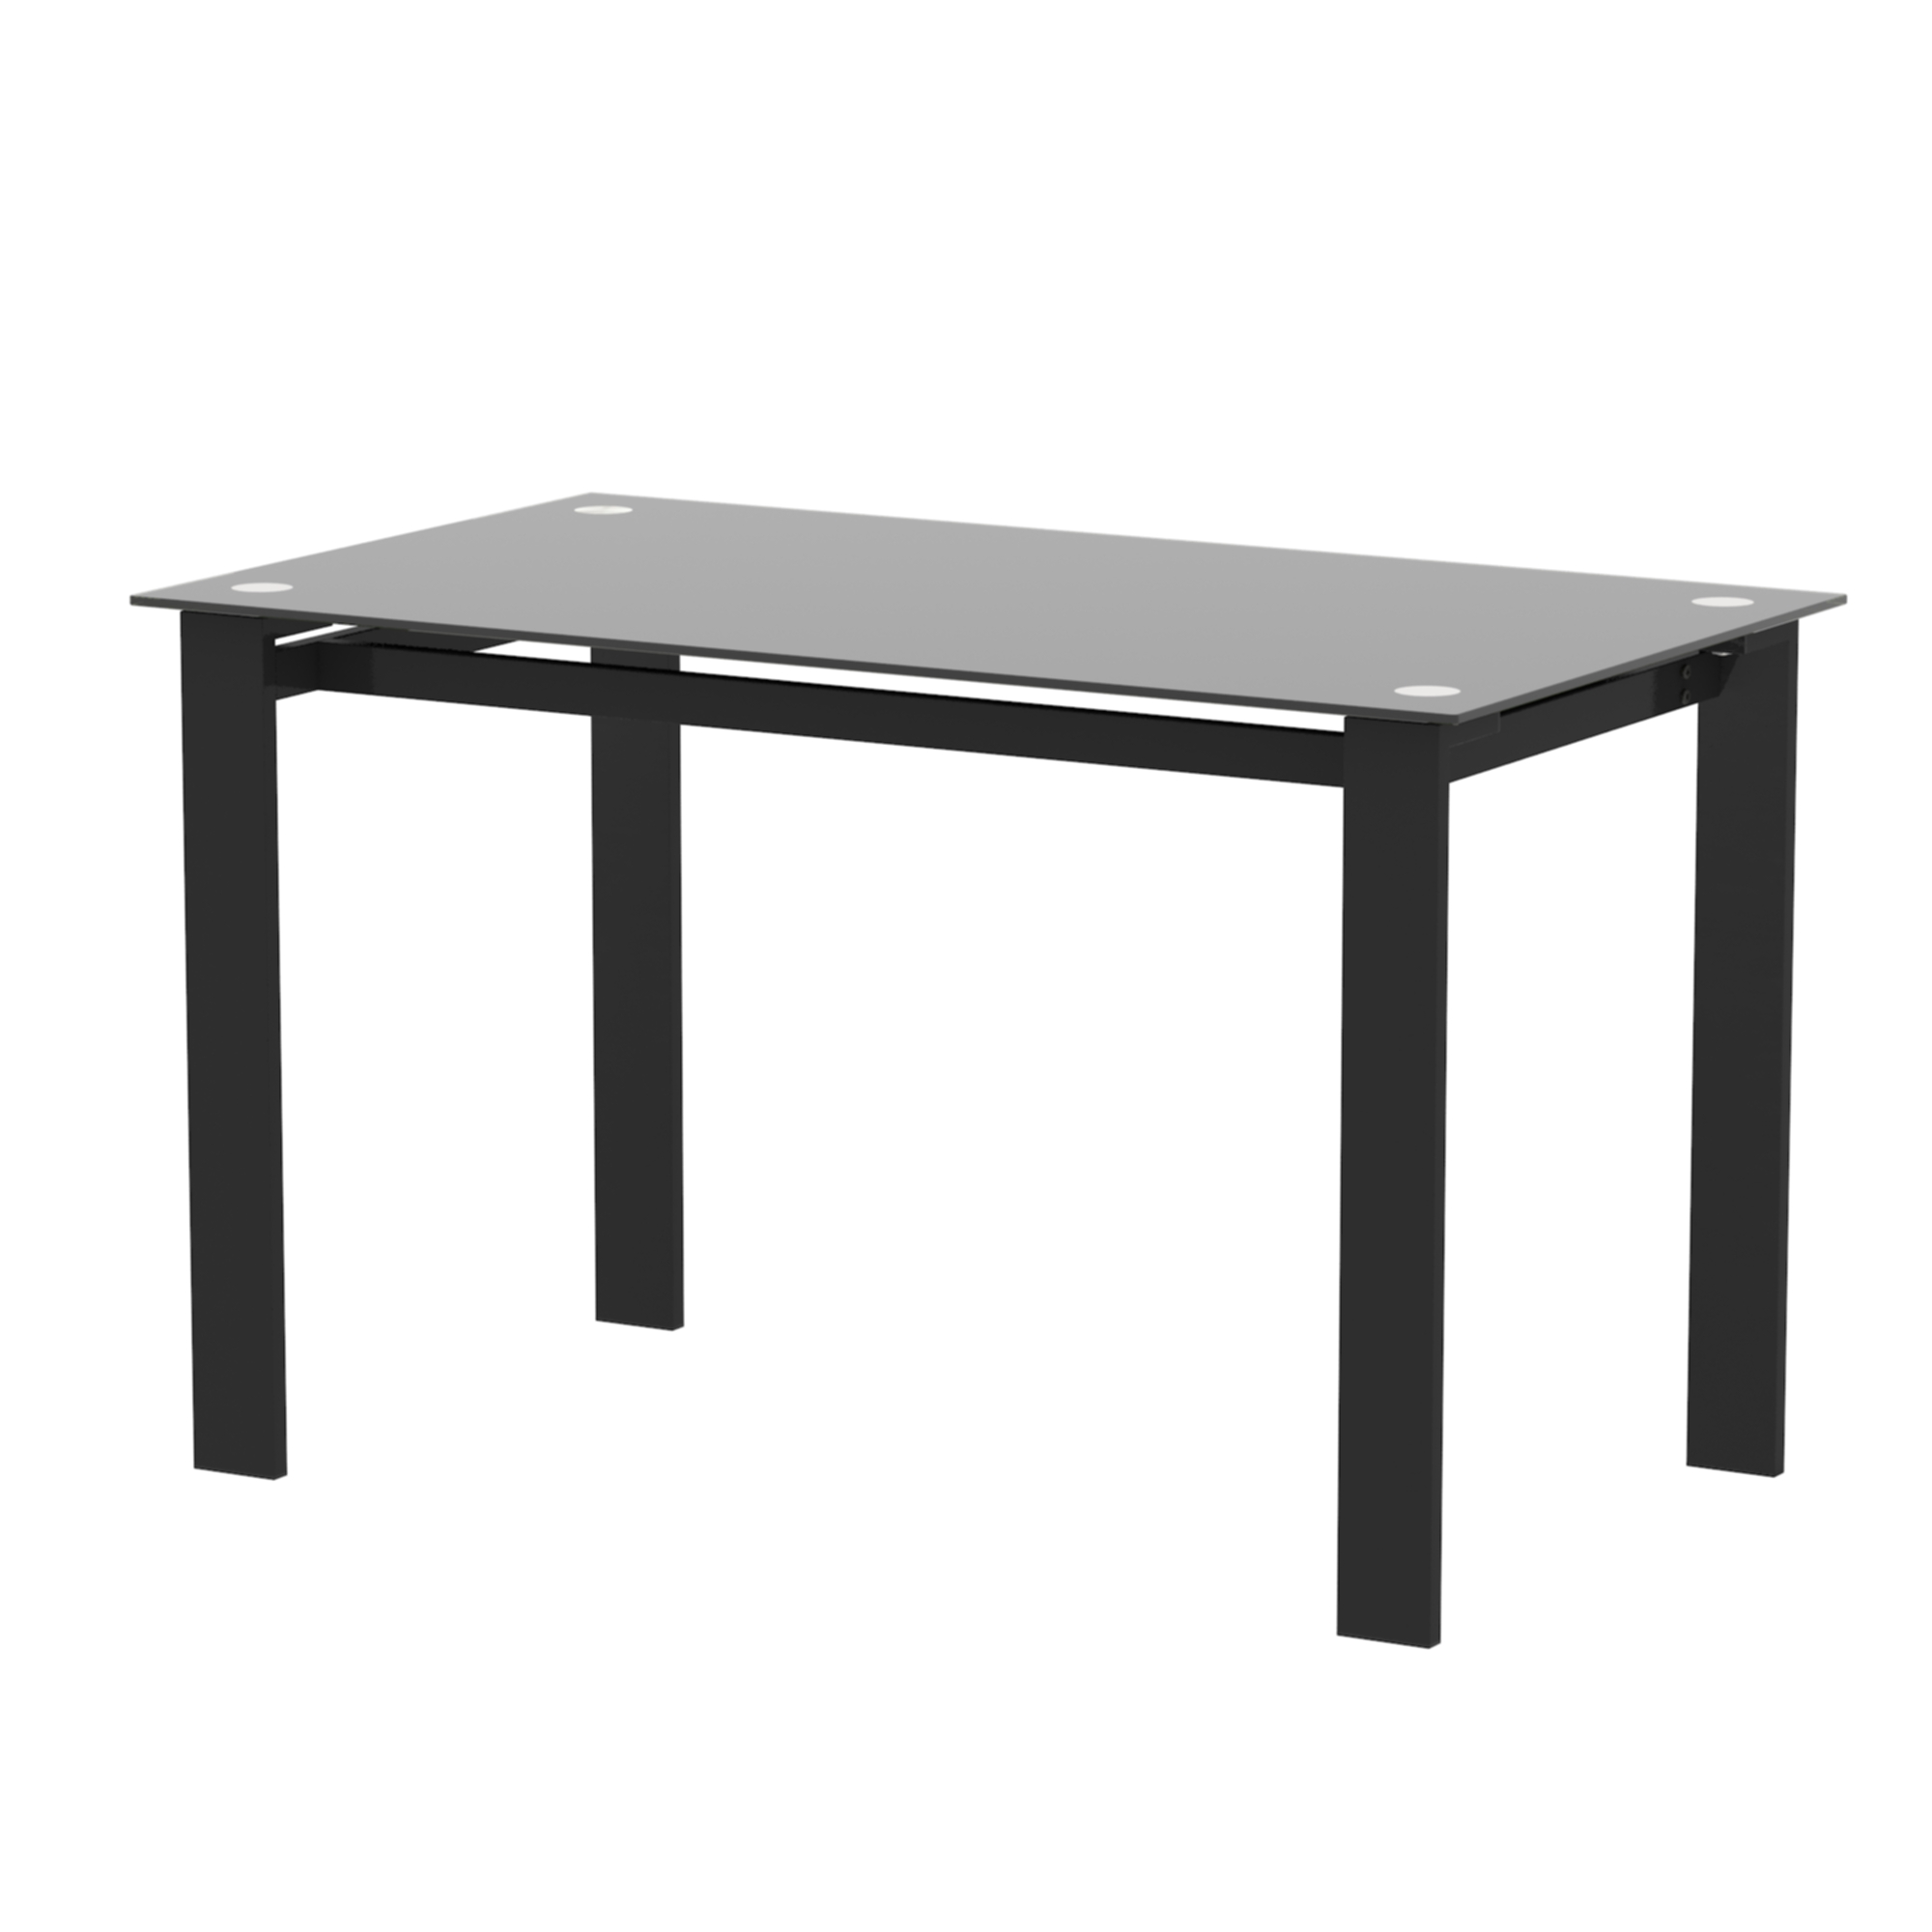 Modern tempered glass black dining table, simple rectangular metal table legs living room kitchen table-Boyel Living